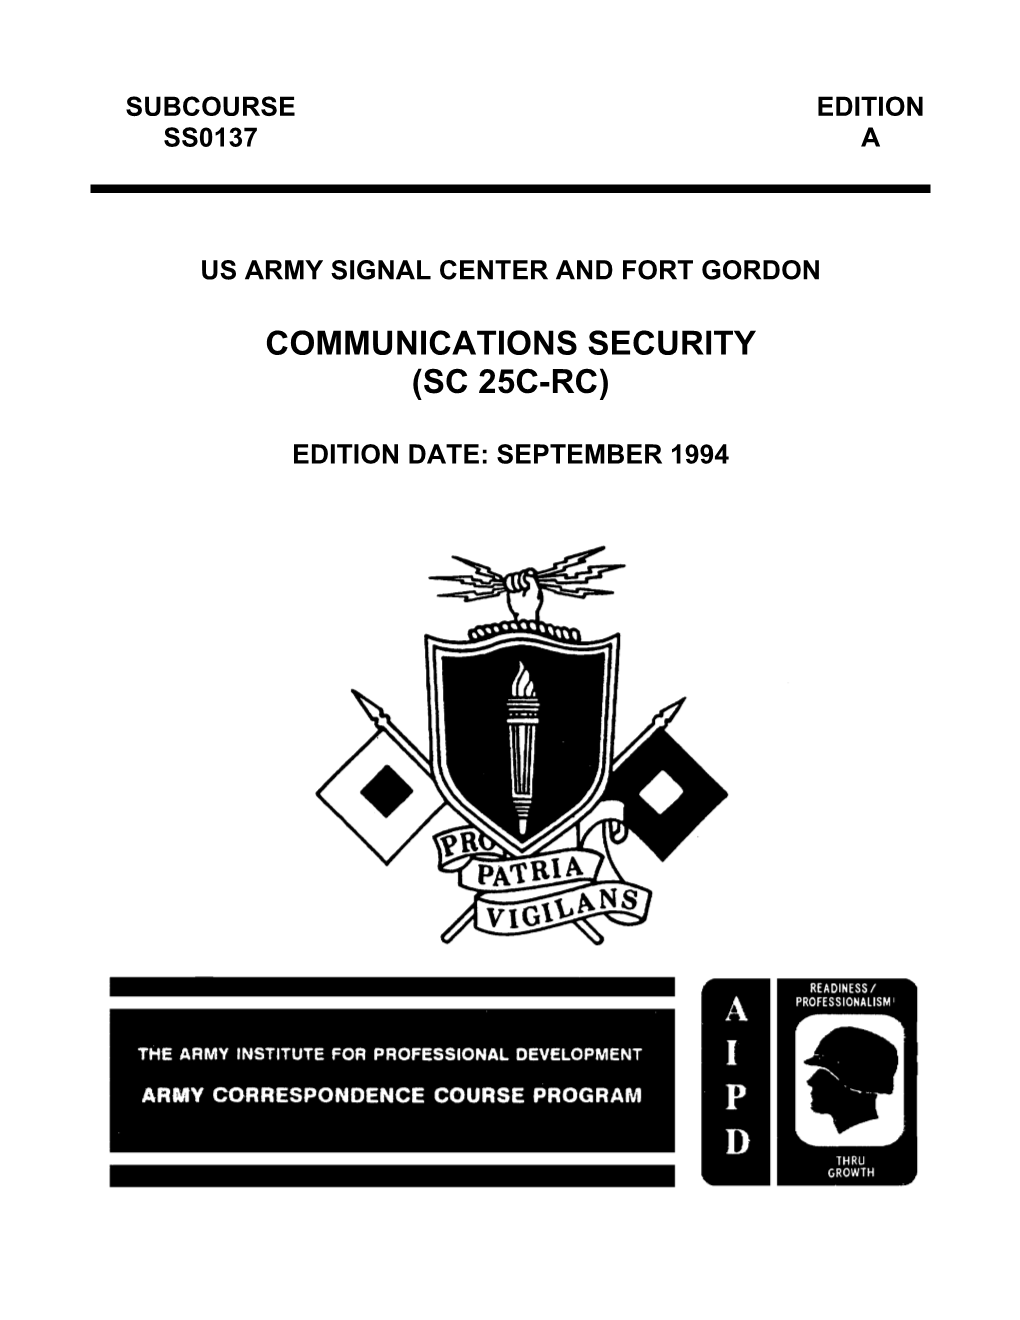 Communications Security (Sc 25C-Rc)